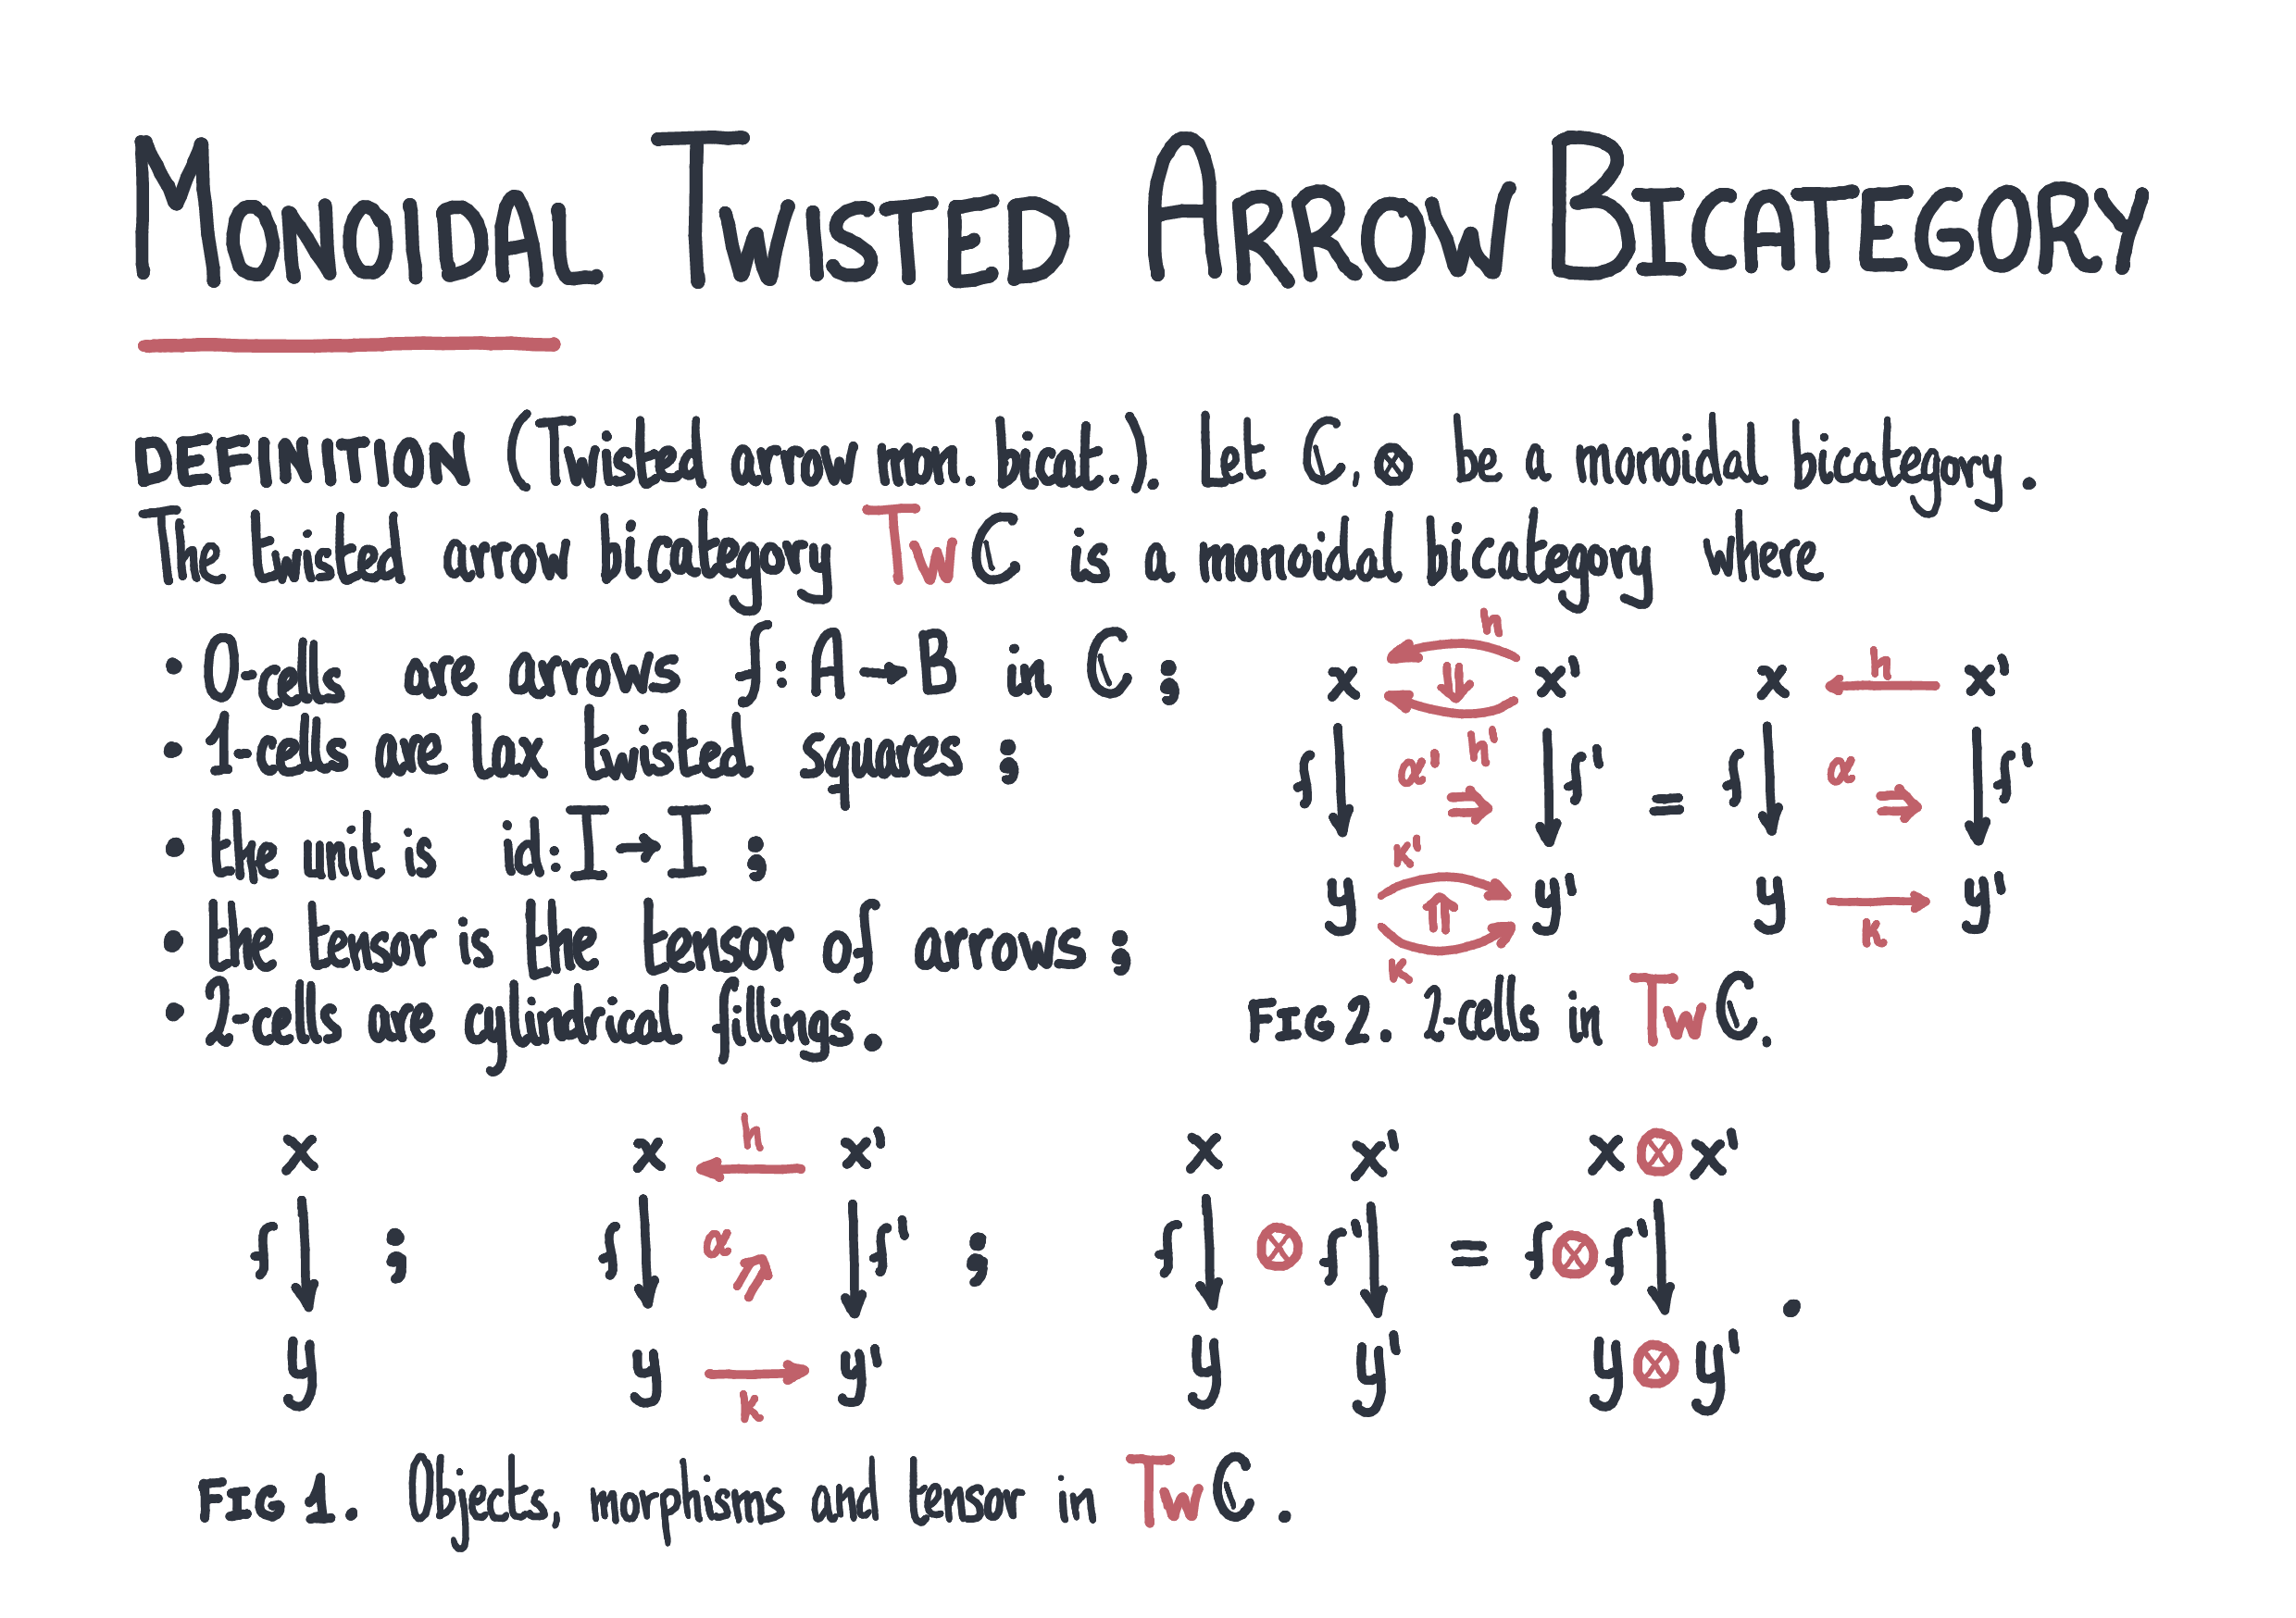 monoidal-twisted-arrow-bicategory